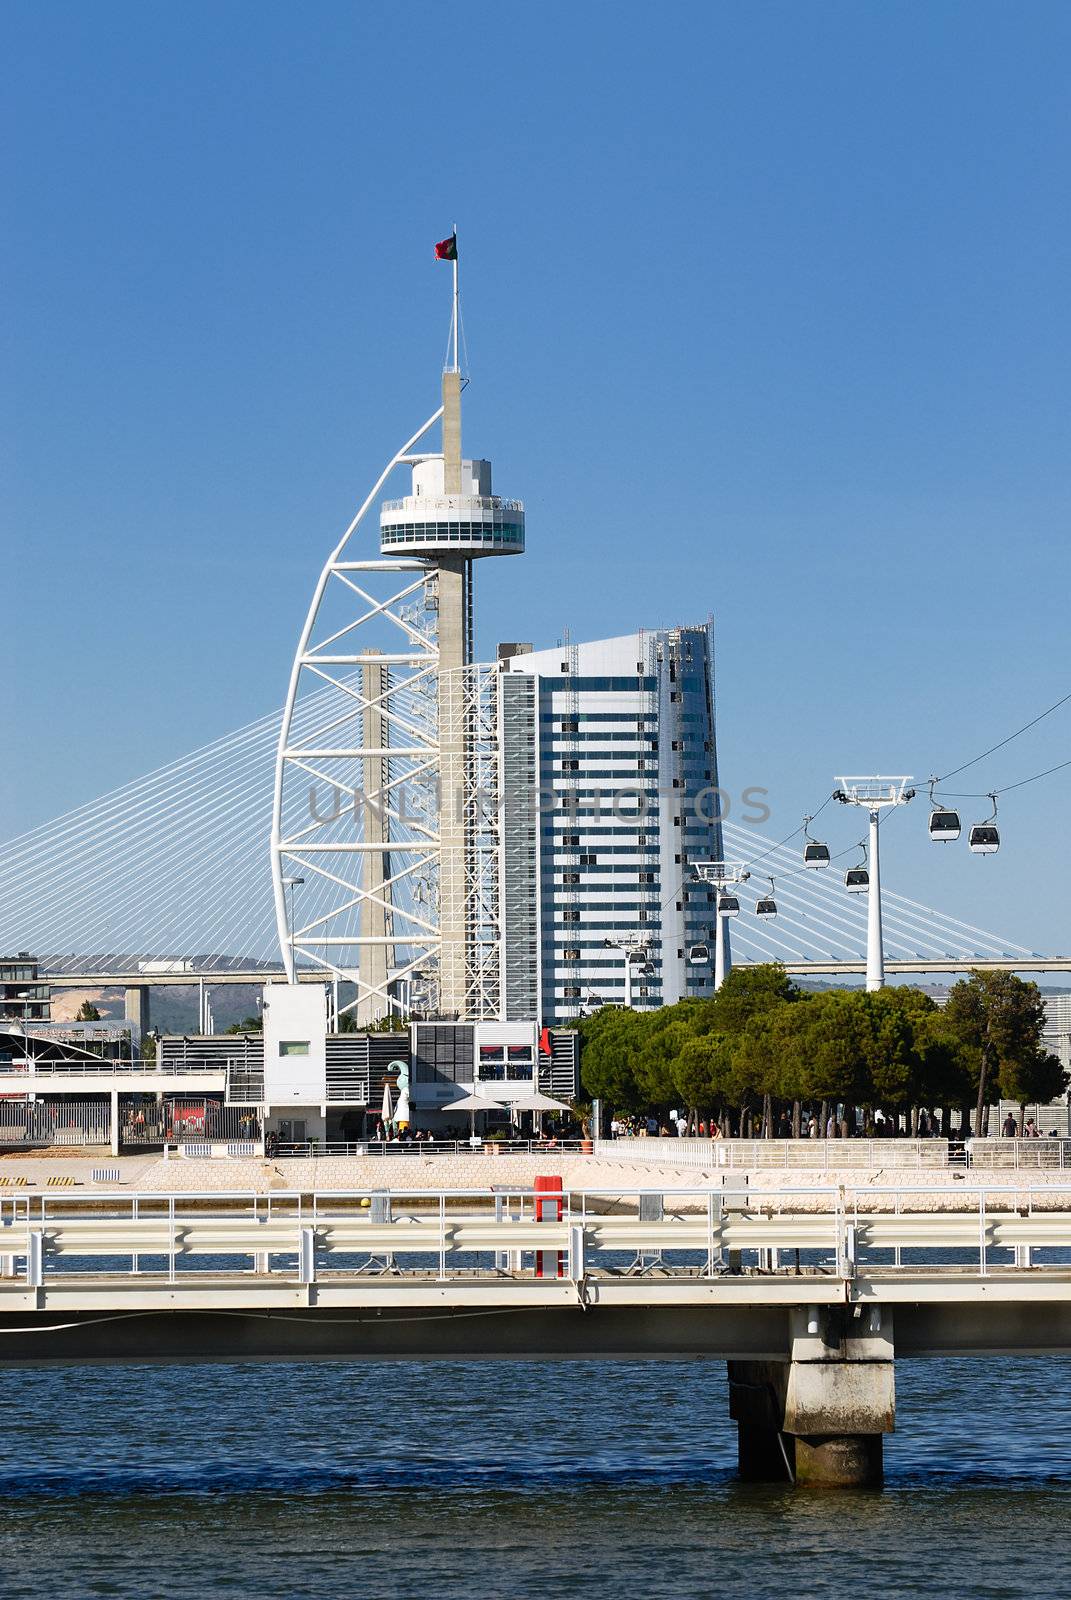 Tower Vasco da Gama with cable car, Lisbon, Portugal 